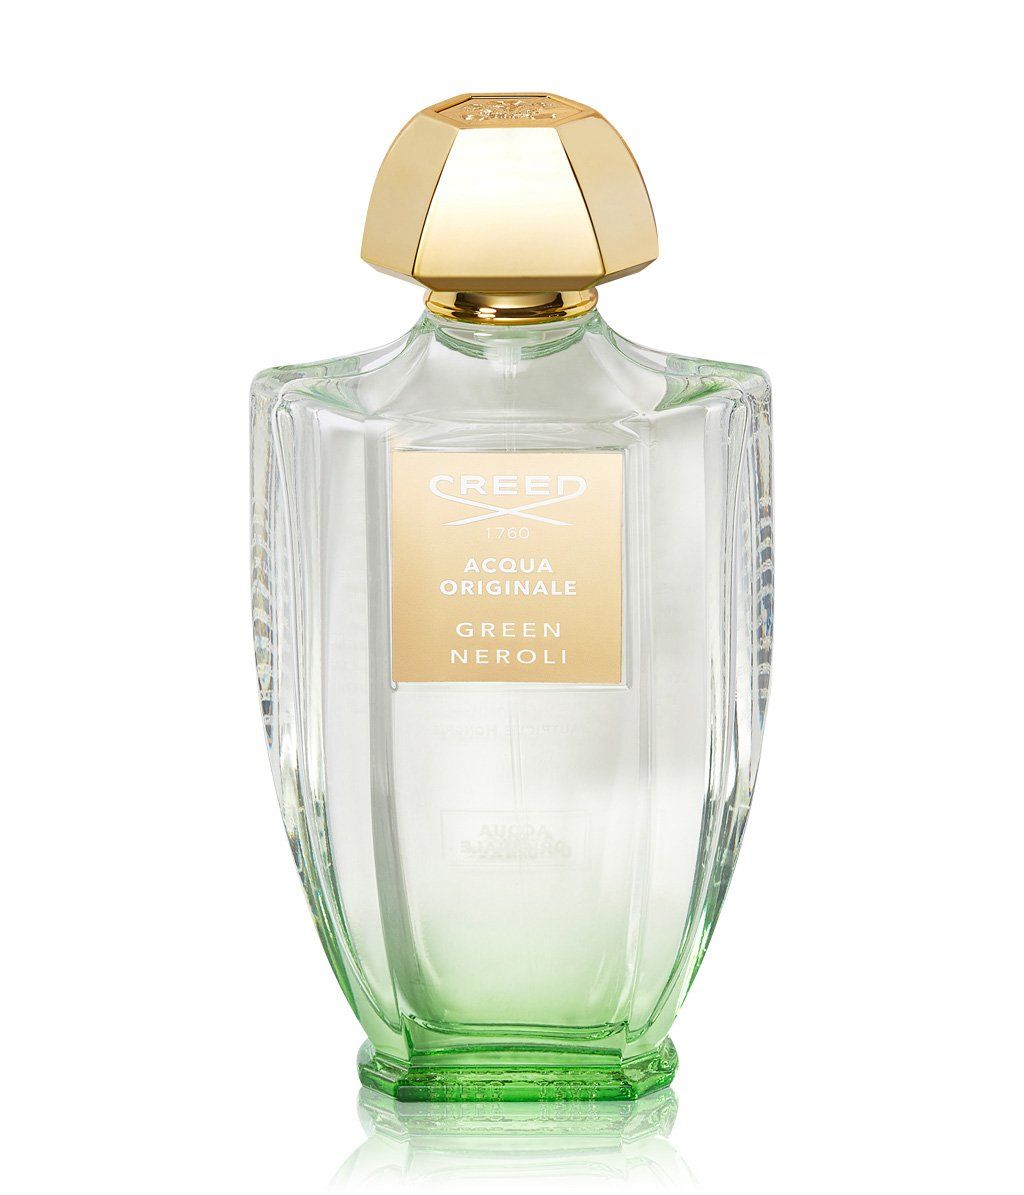 Green Neroli Creed perfume - a new 